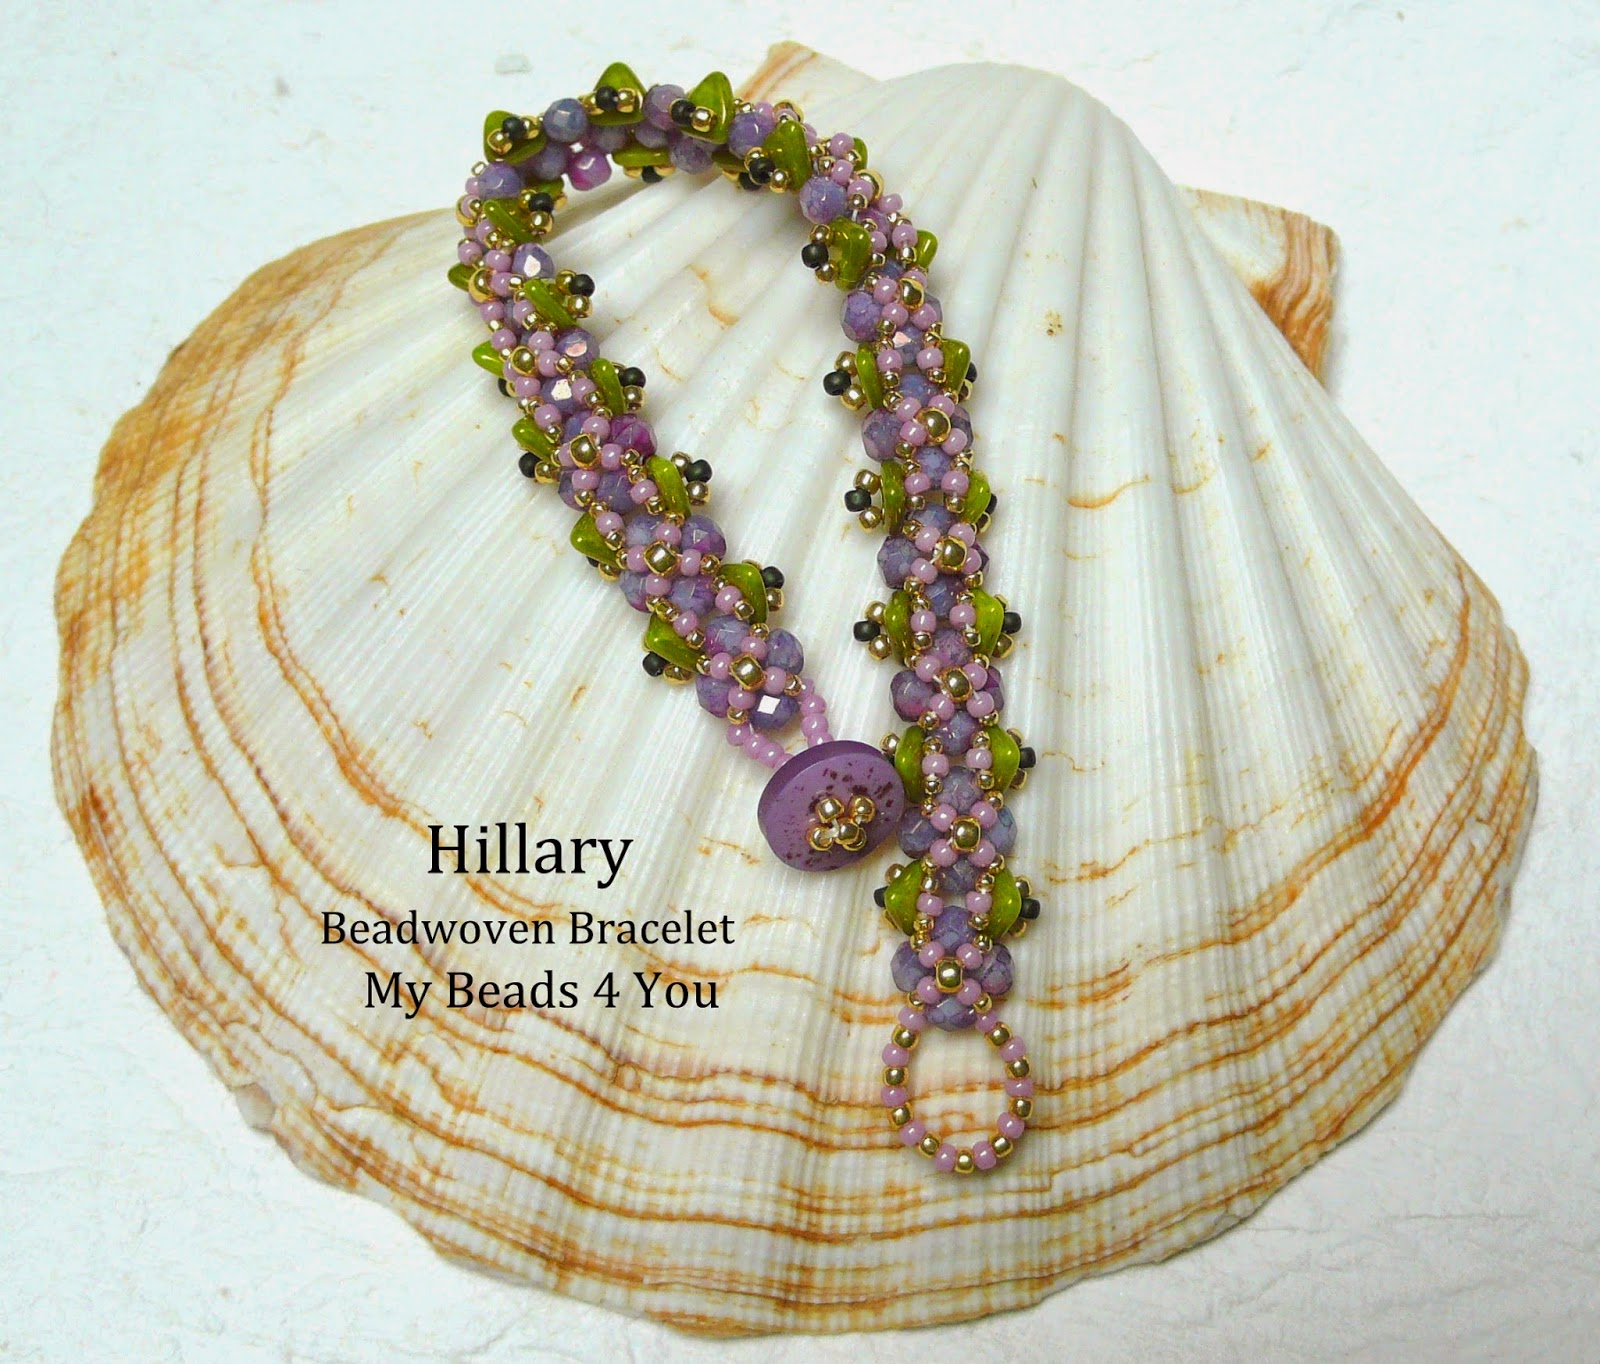 MyBeads4You: Beadwoven Bracelet Hillary with 2 Hole Triangle Beads!